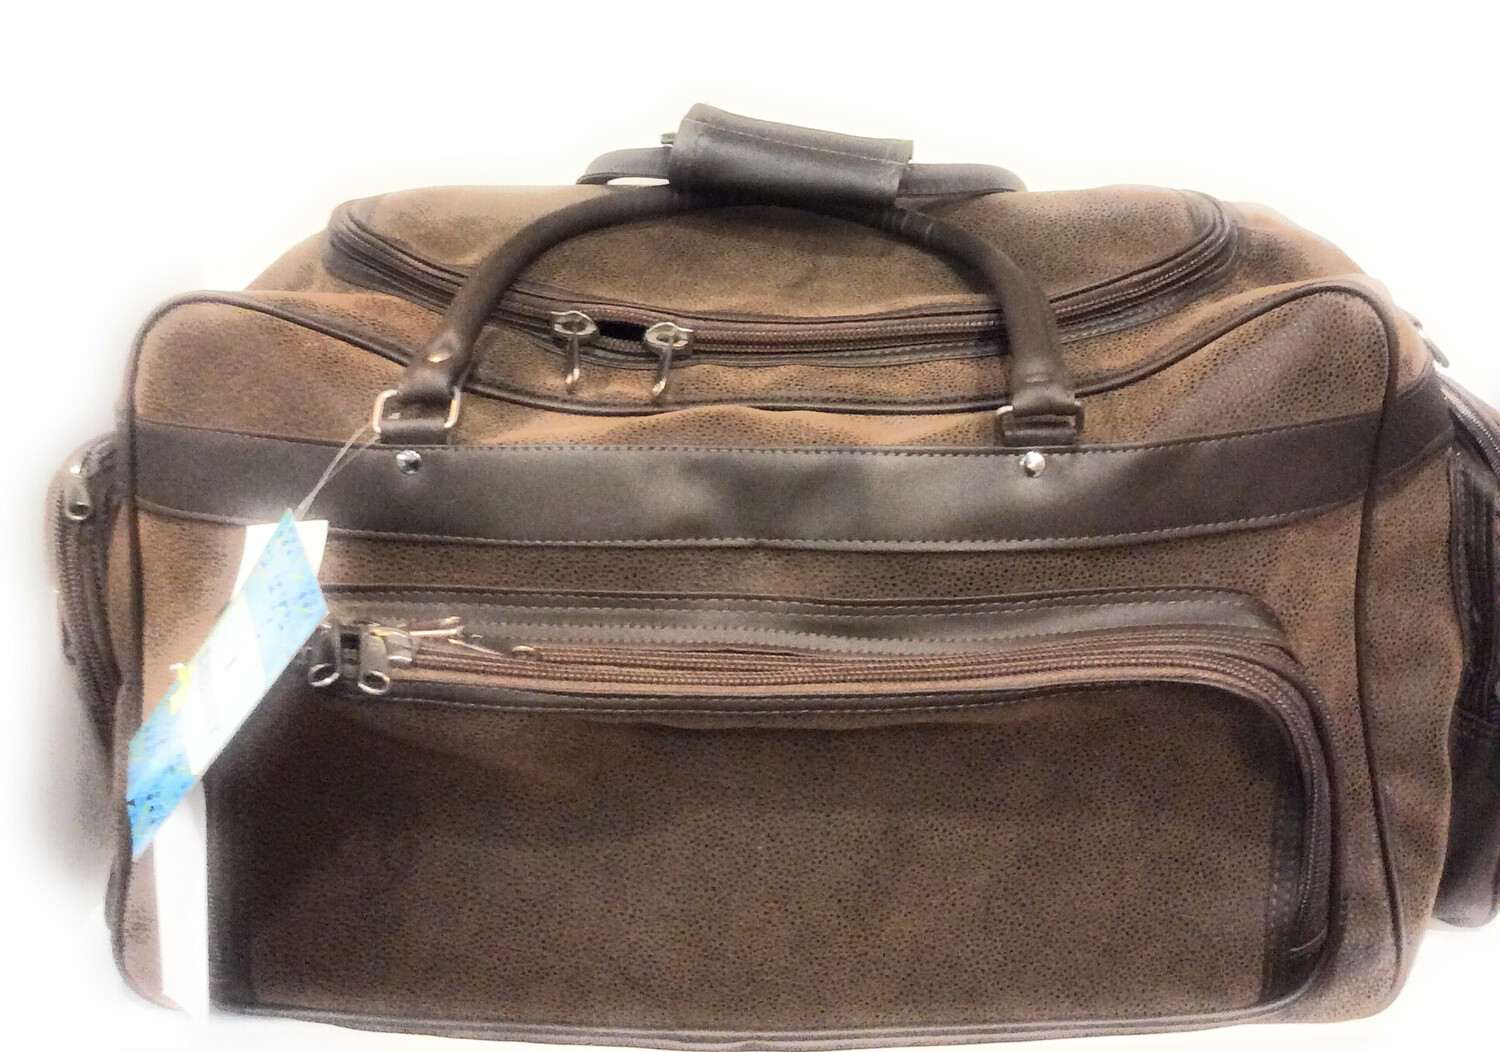 Travel bag size 22x11x10